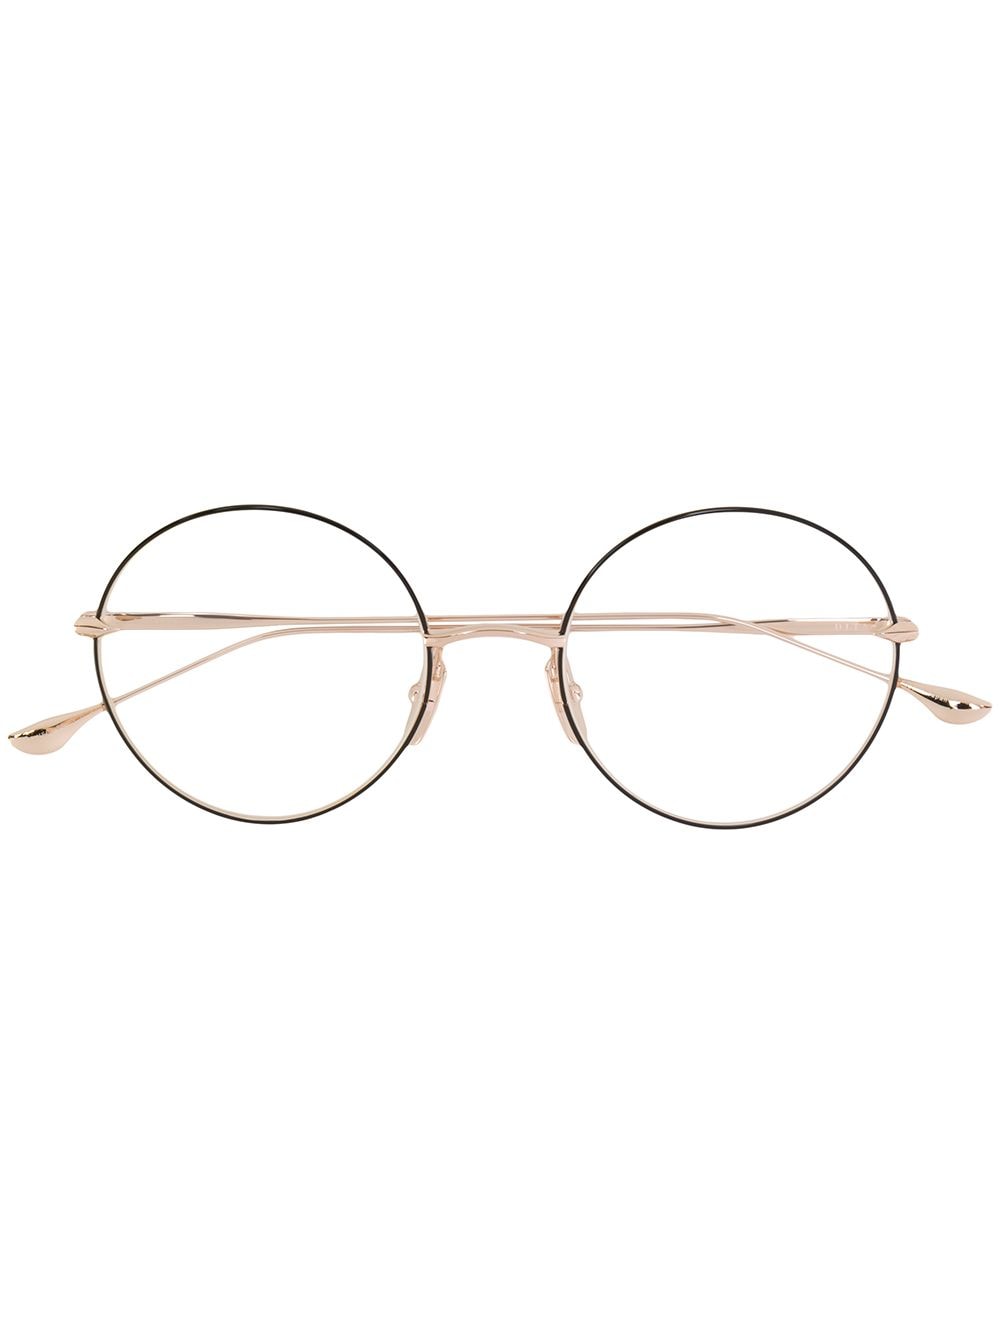 Dita Eyewear Believer round glasses - Metallic von Dita Eyewear